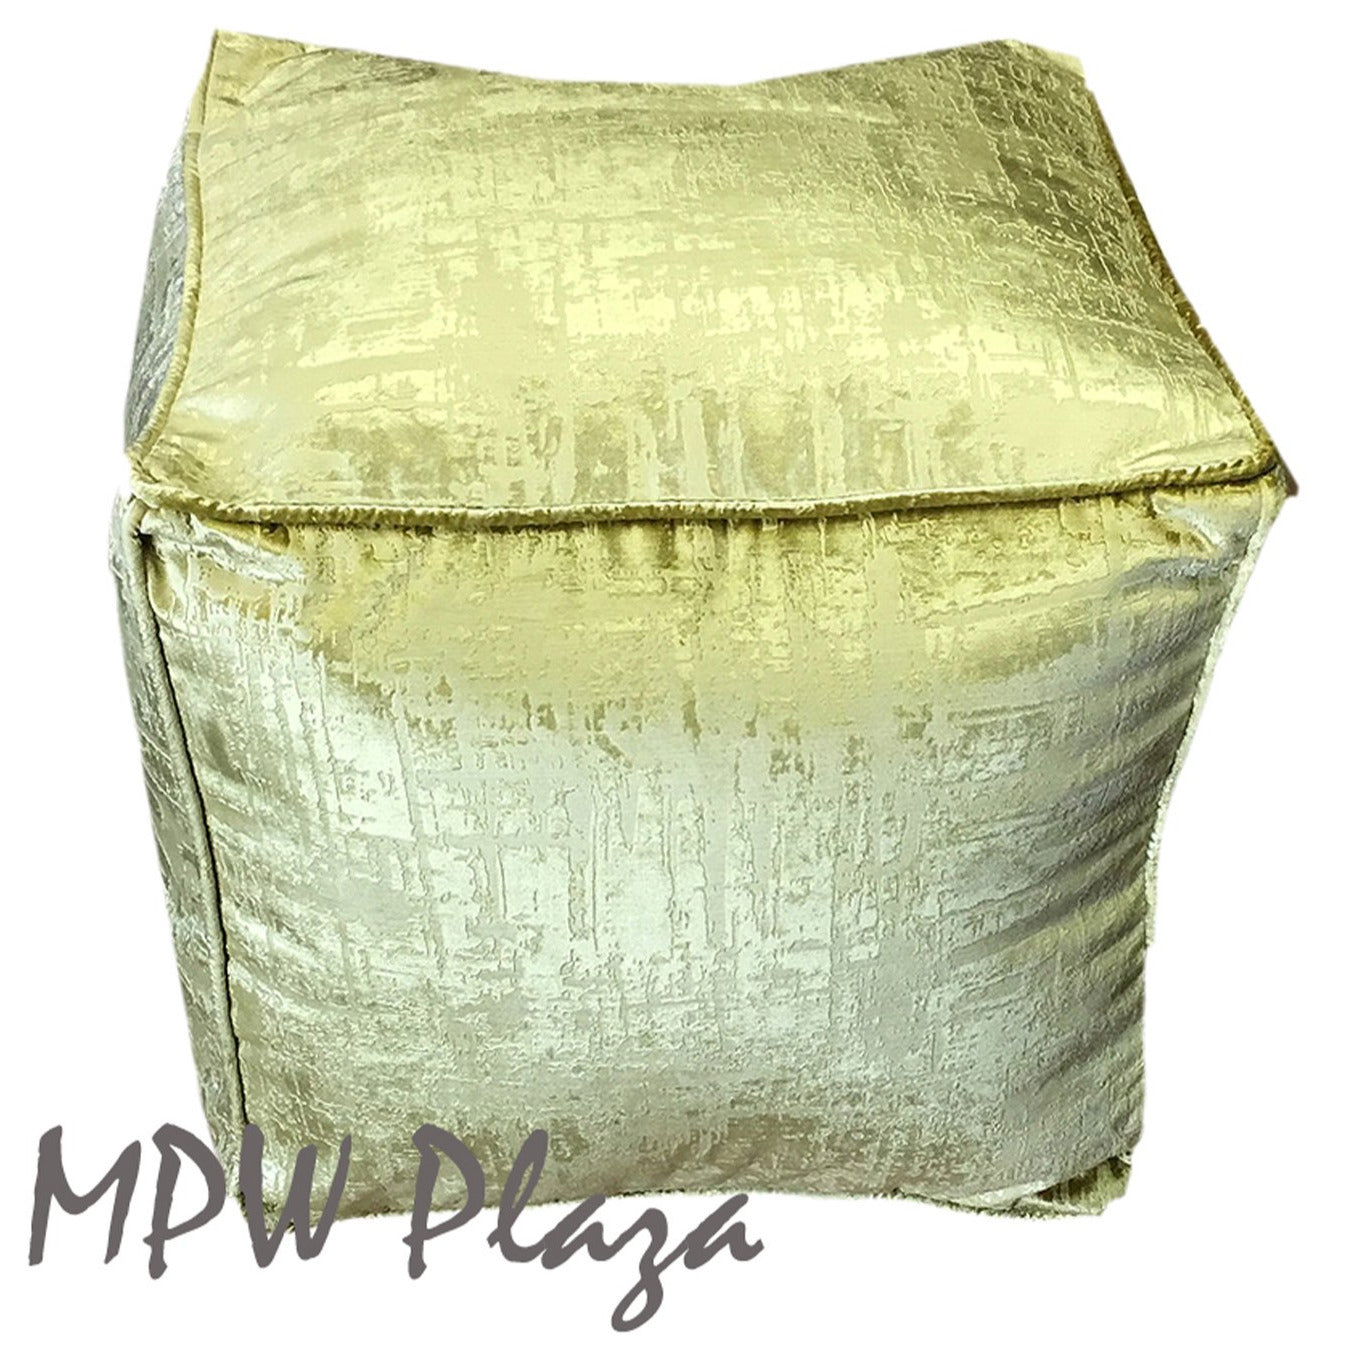 MPW Plaza® Velvet Square Pouf Green tone 18" x 18" Topshelf Velvet,  ottoman (Cover) freeshipping - MPW Plaza®